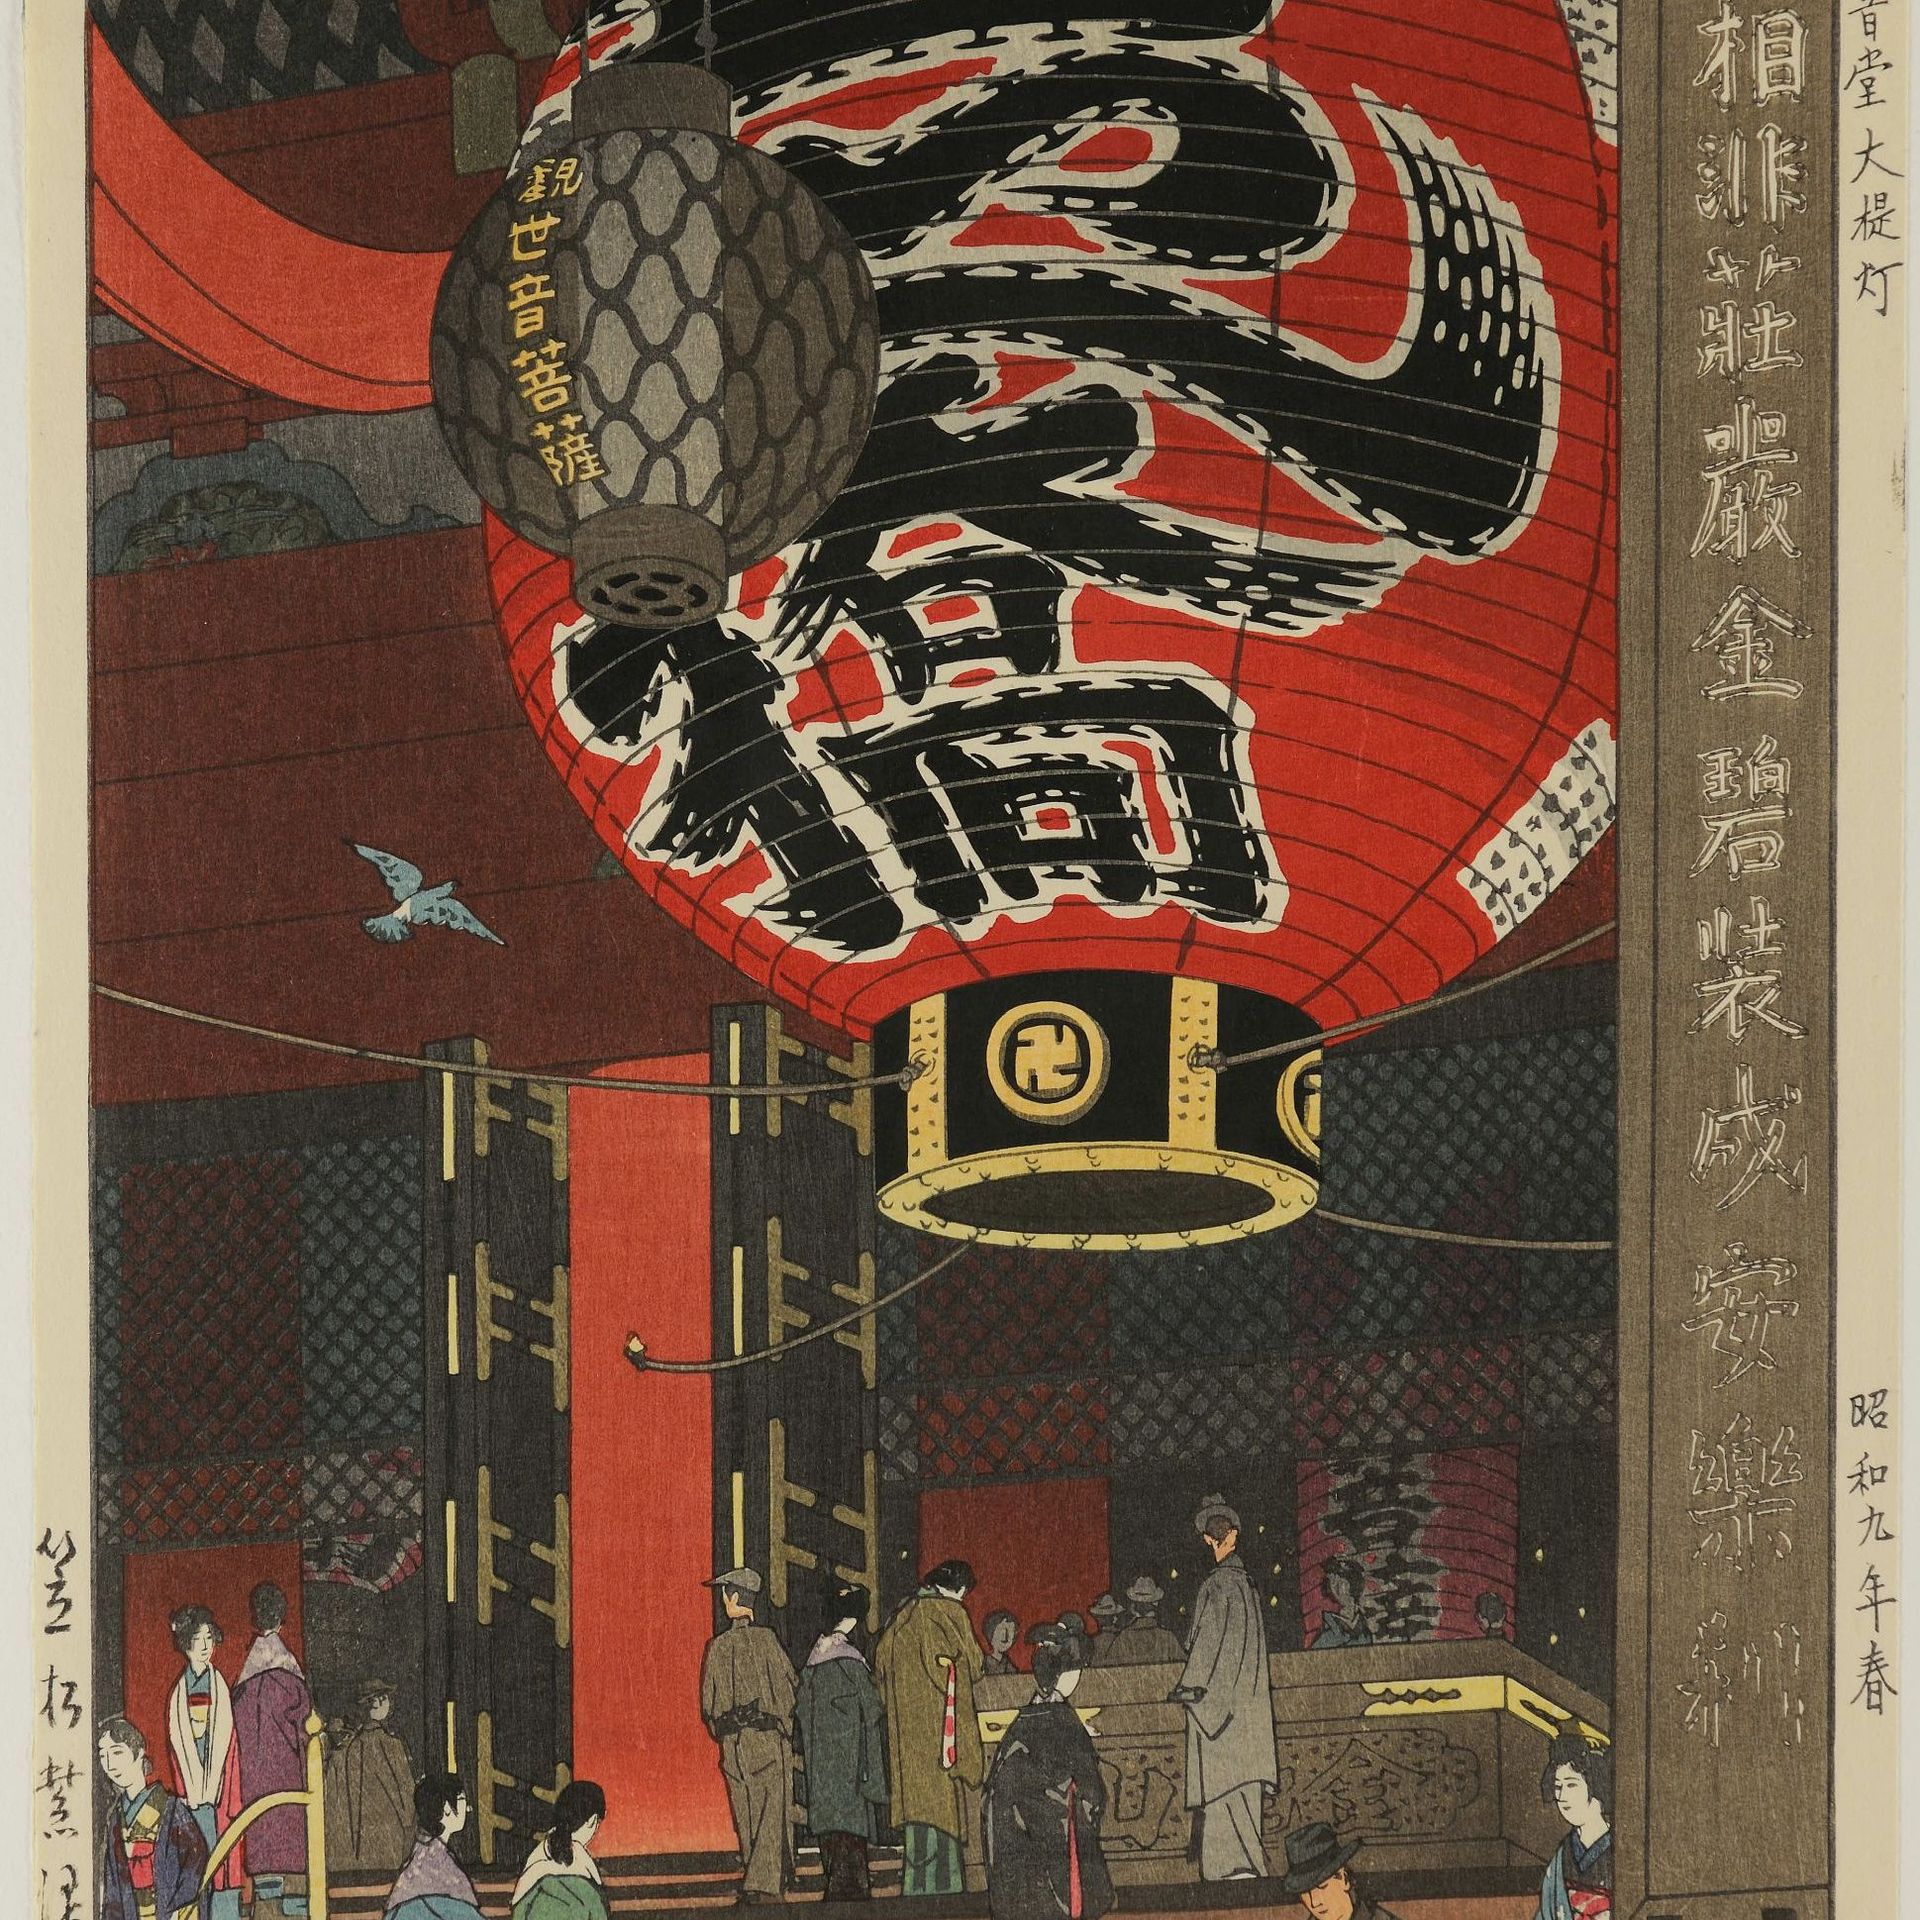 Kasamatsu Shirō (1898-1991), La grande lanterne du Kannondō, 1934

